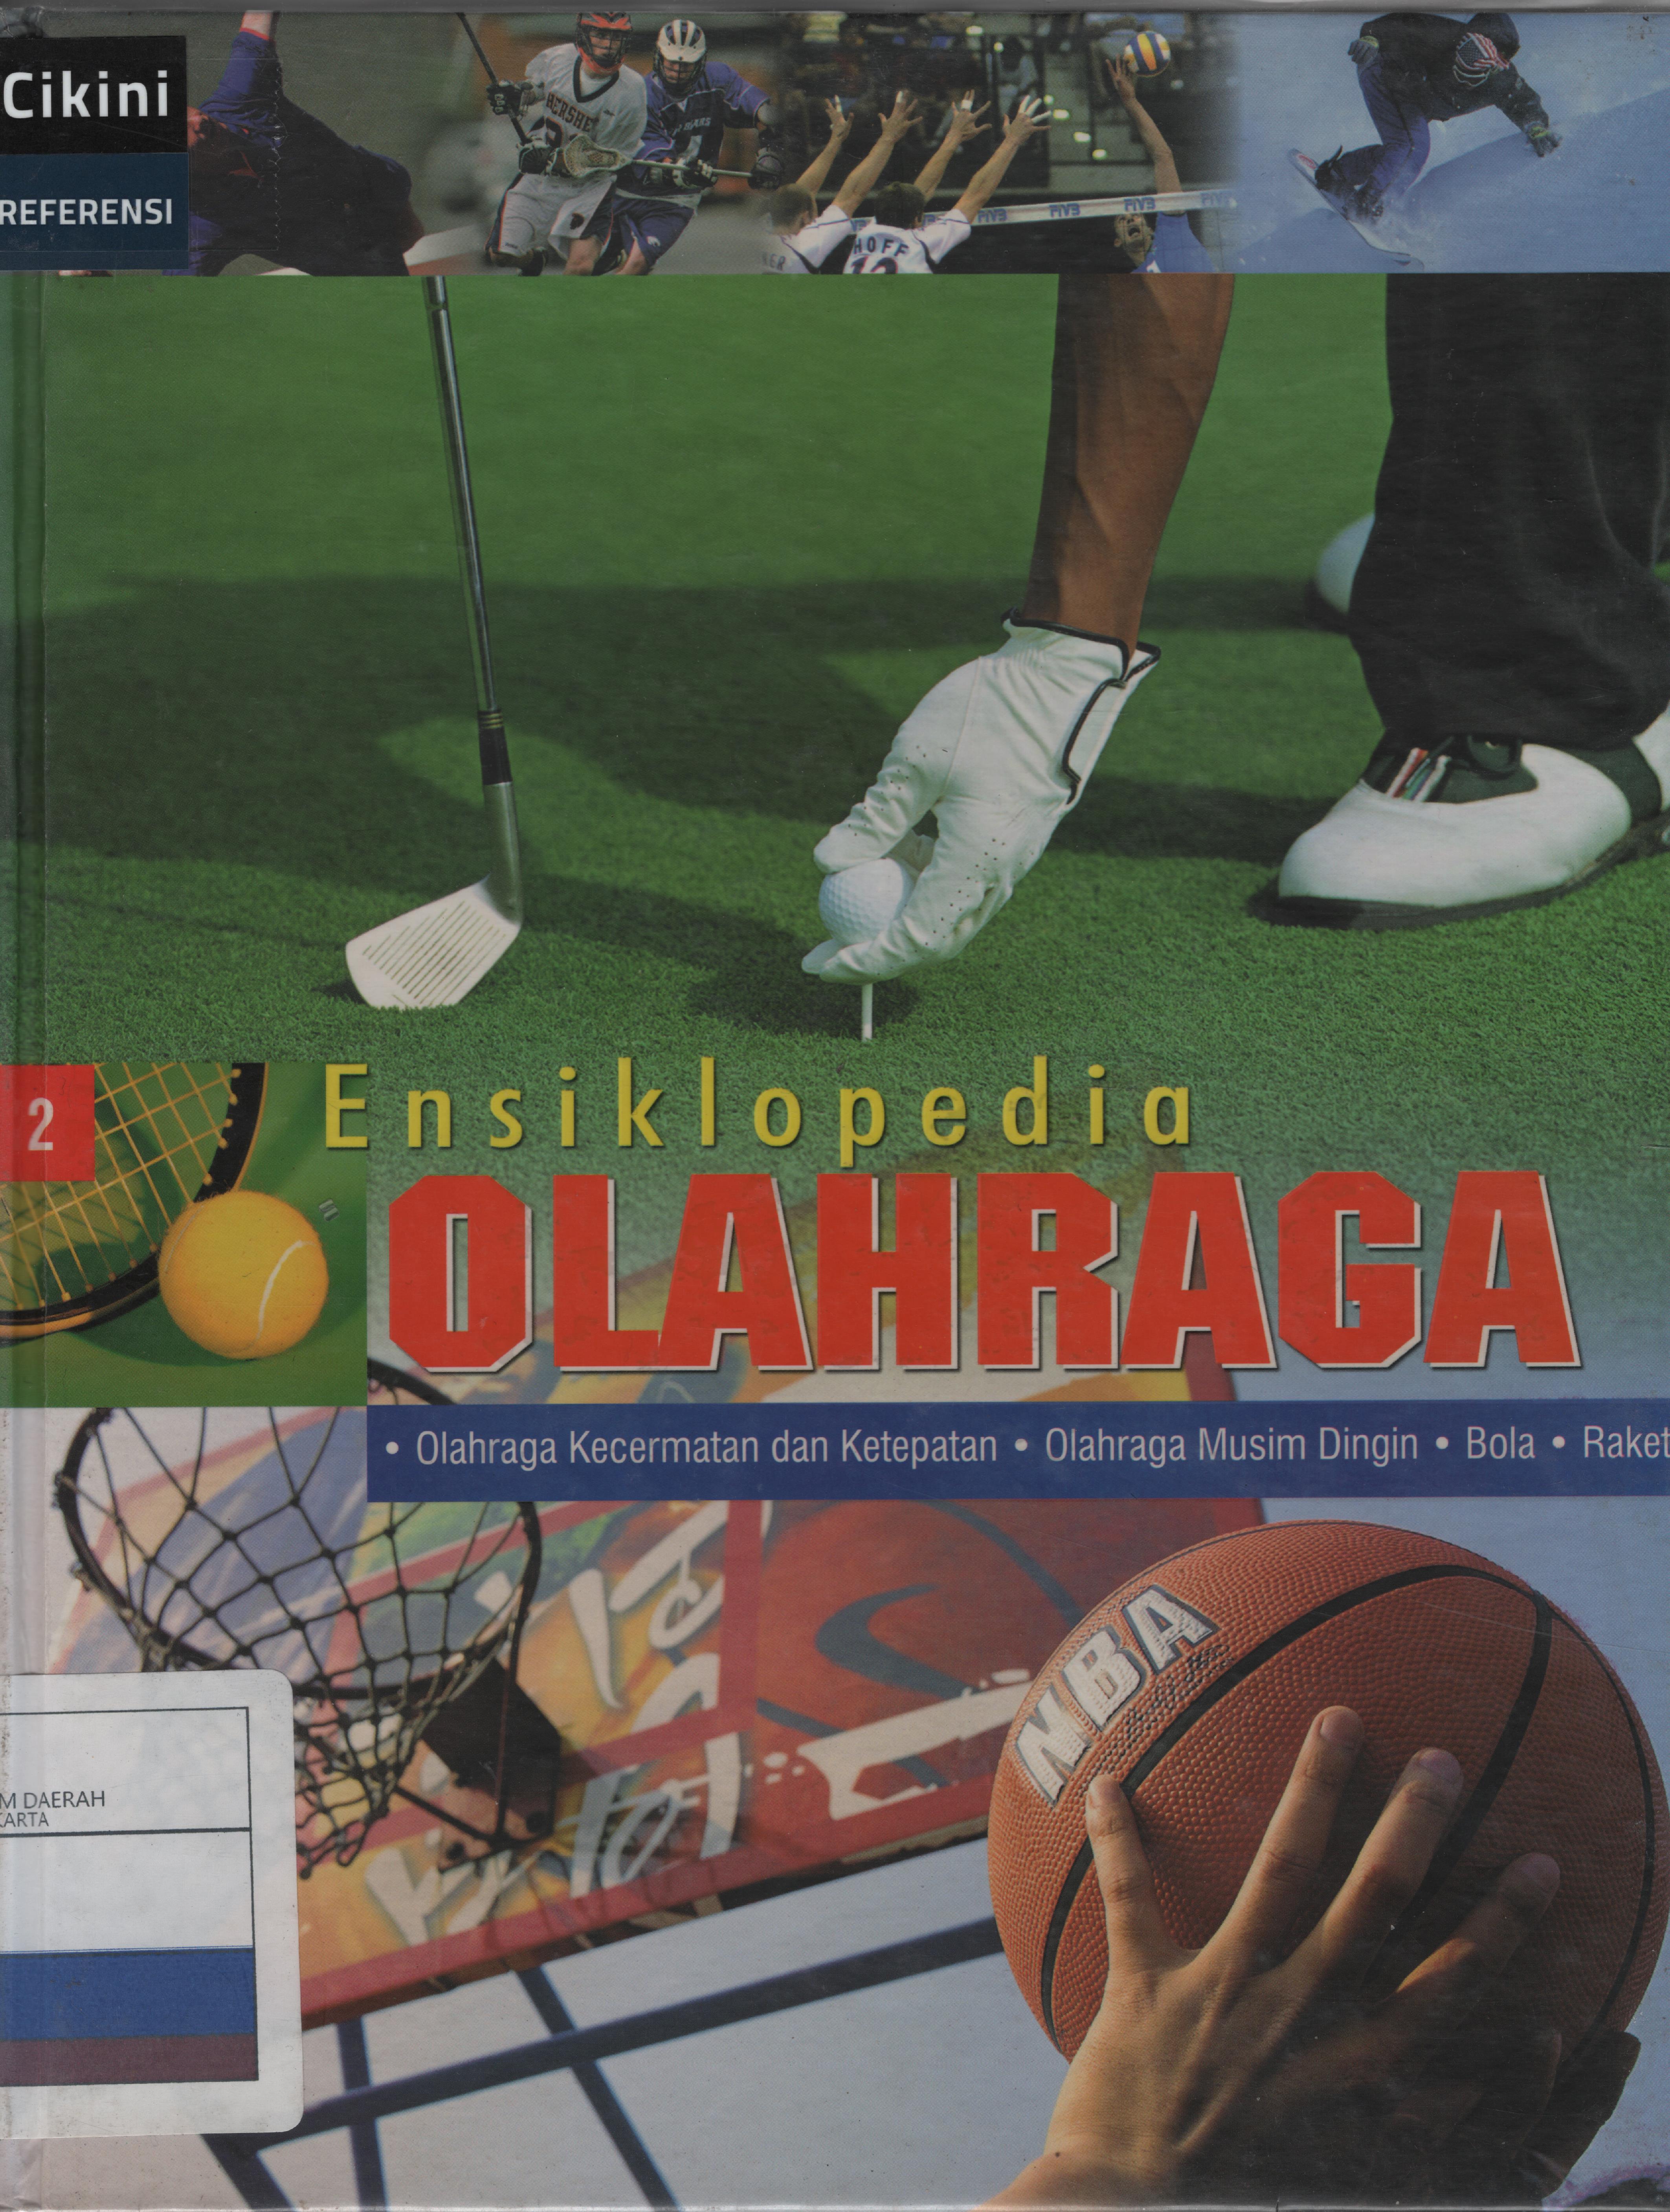 Ensiklopedia olahraga. :  olahraga kecermatan dan ketepatan, olahraga musim dingin, bola, raket